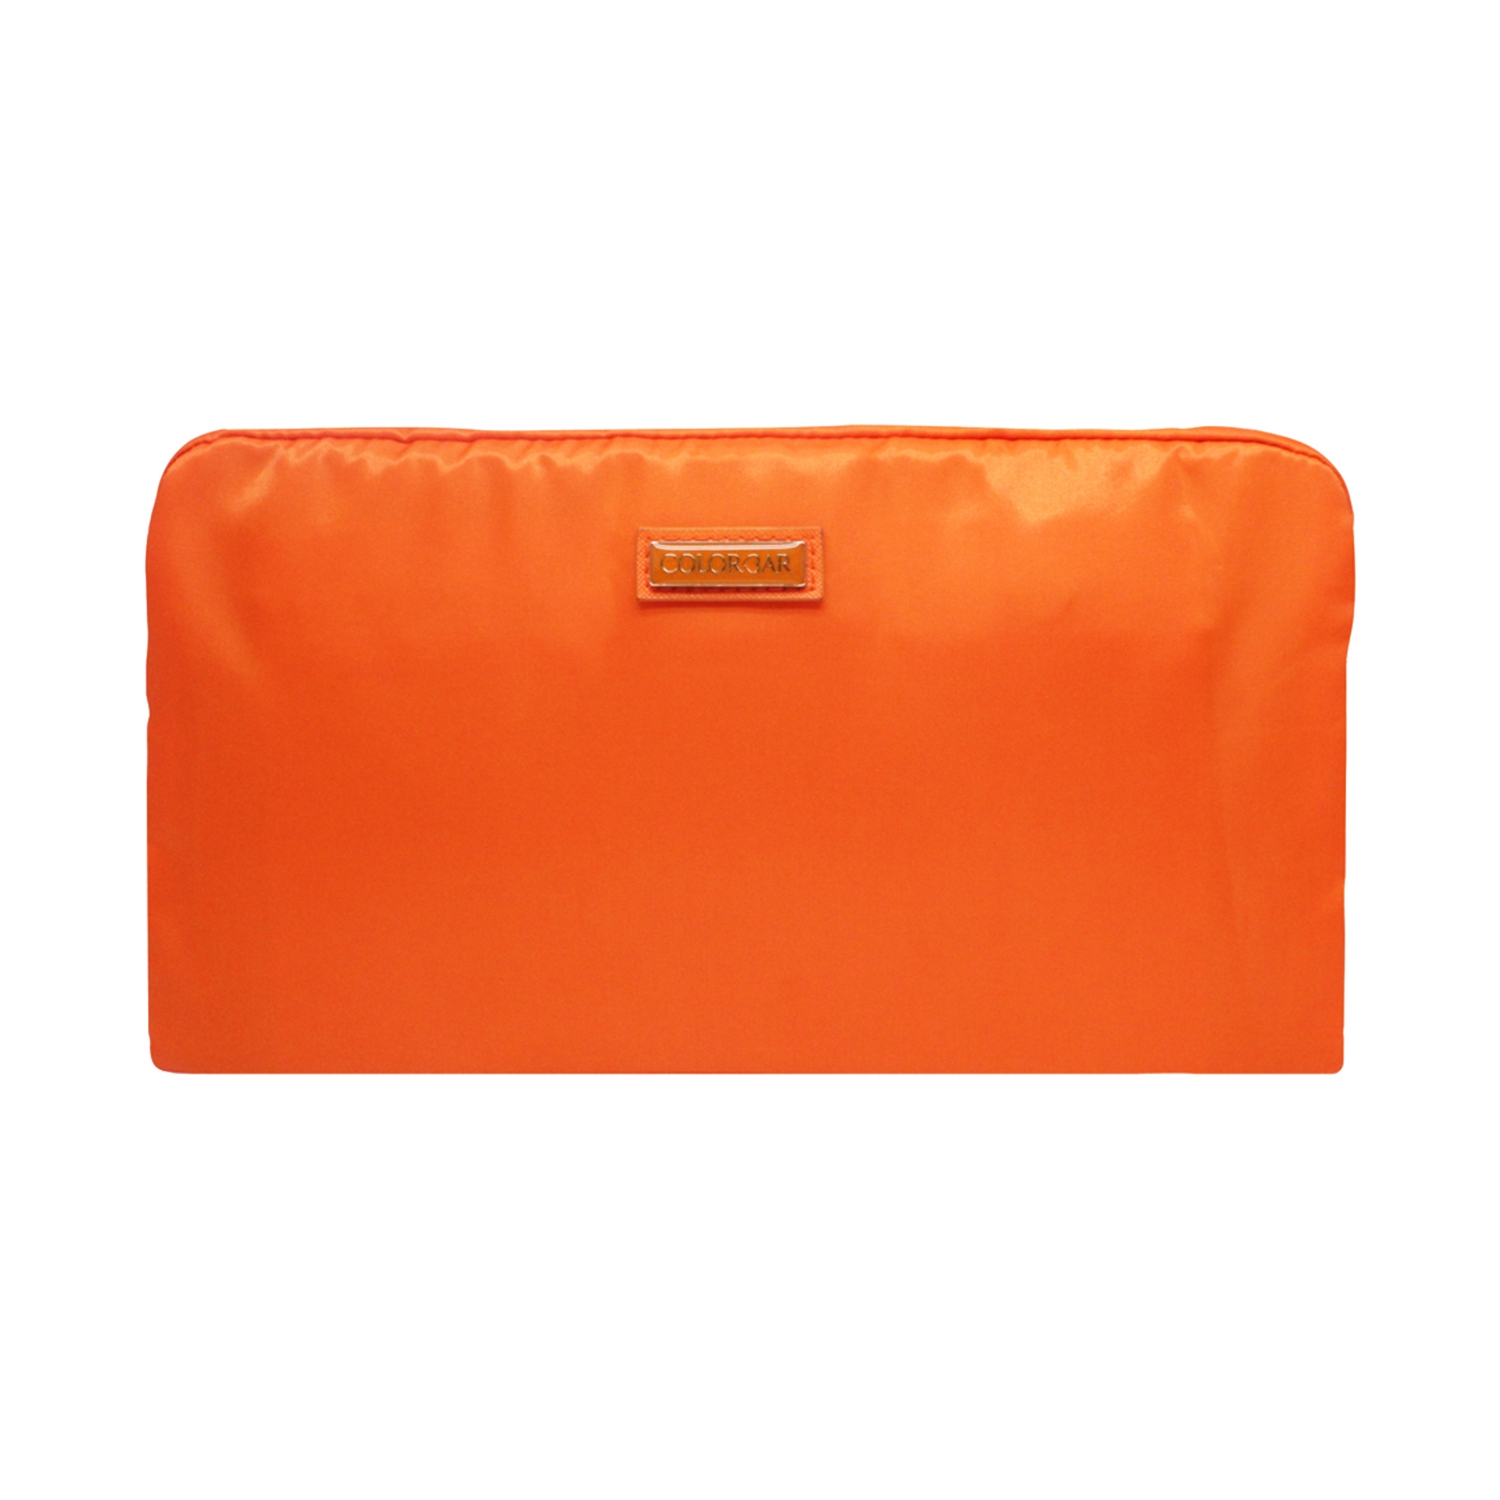 Colorbar | Colorbar Mega Pouch New - Orange